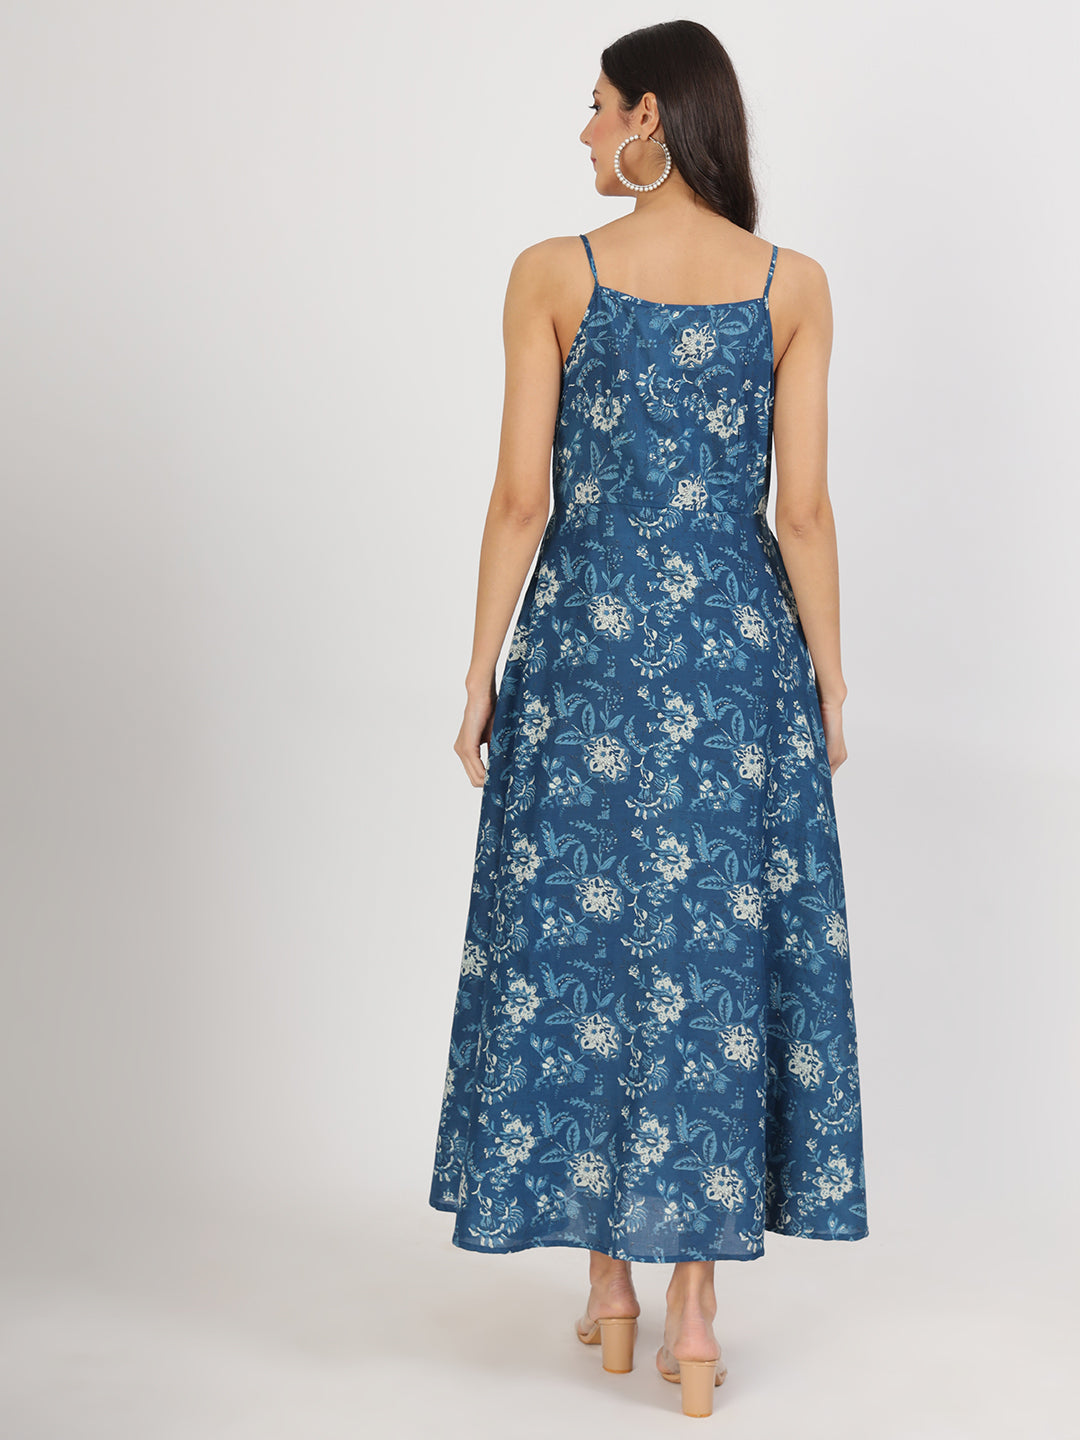 Indigo Blue Cotton Long Dress for Women